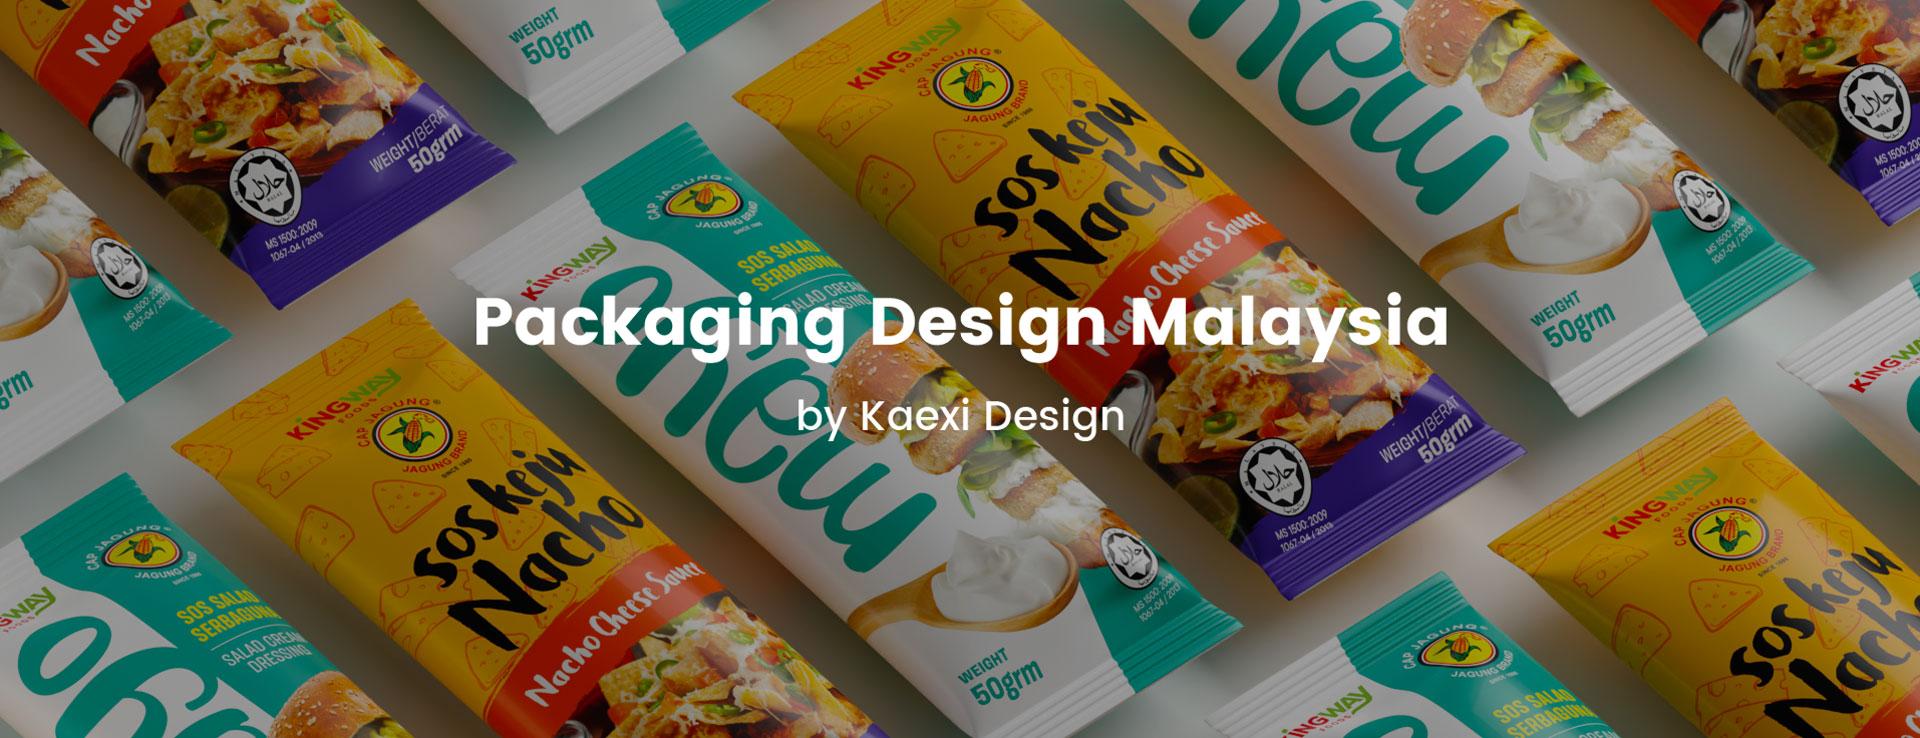 Jagung Brand Packaging Design Malaysia